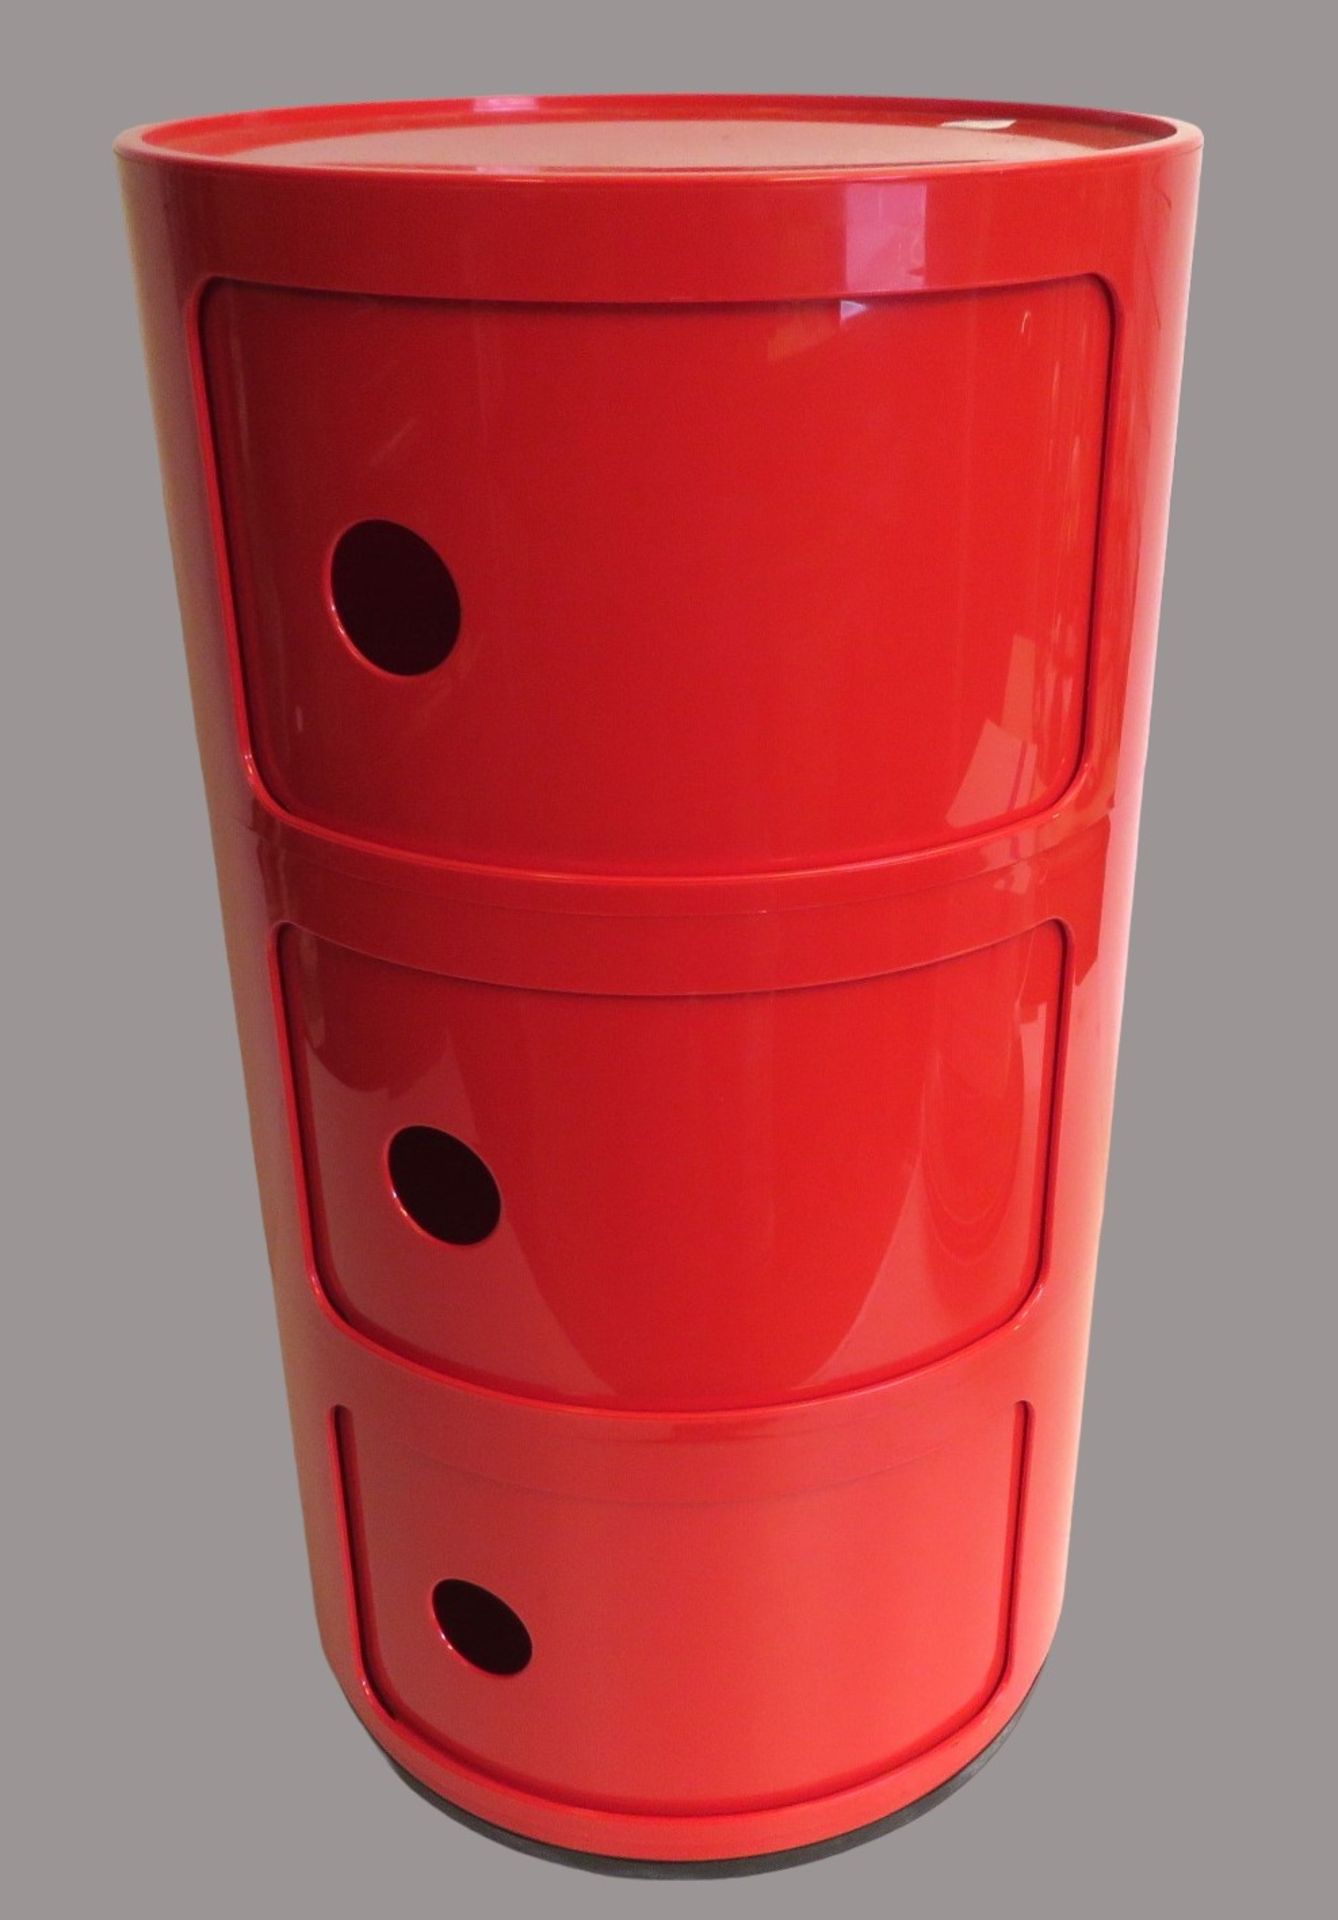 Componibili 3 Container, Kartell, Entwurf Anna Castelli Ferrieri, 1969, ABS-Kunststoff, rot, 3 Schi